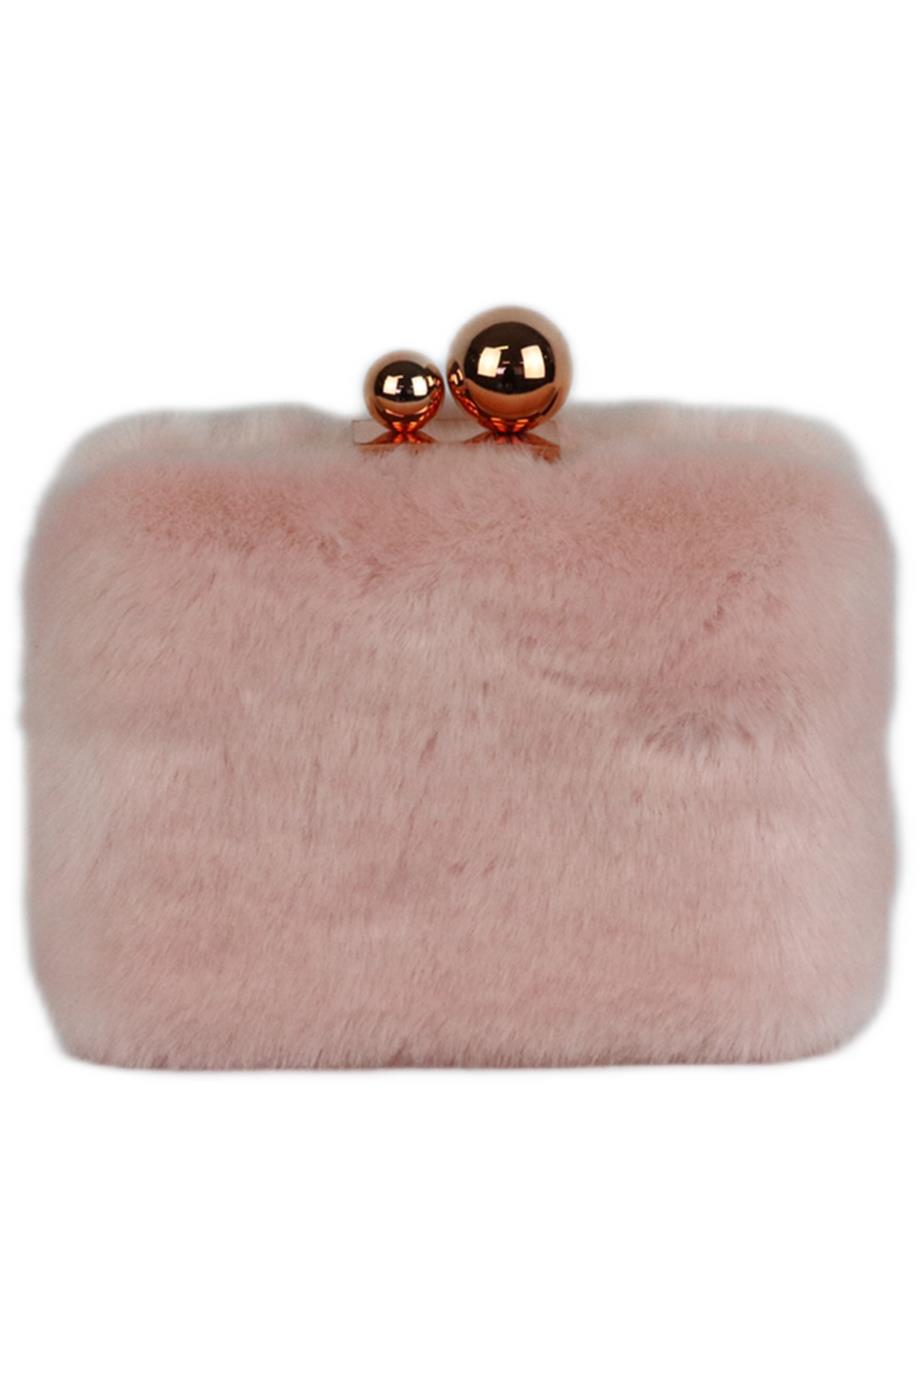 Faux Fur Clutch Bag Vintage Pearl Chain Handle Handbag Shell Purse  Crossbody Bag | eBay